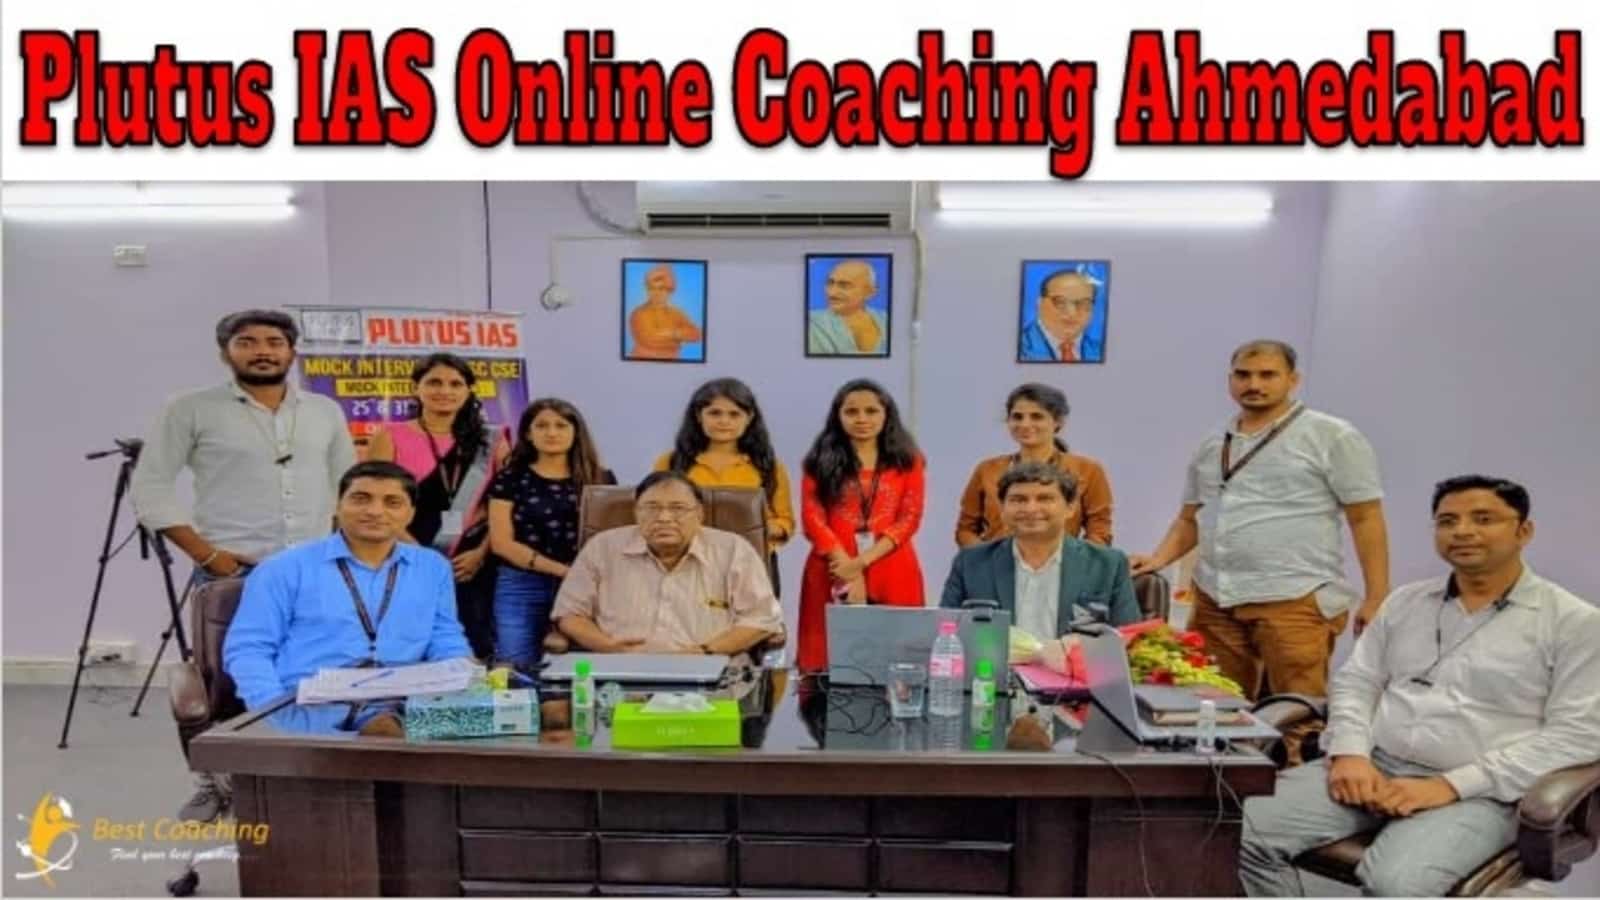 Plutus IAS Online Coaching Ahmedabad